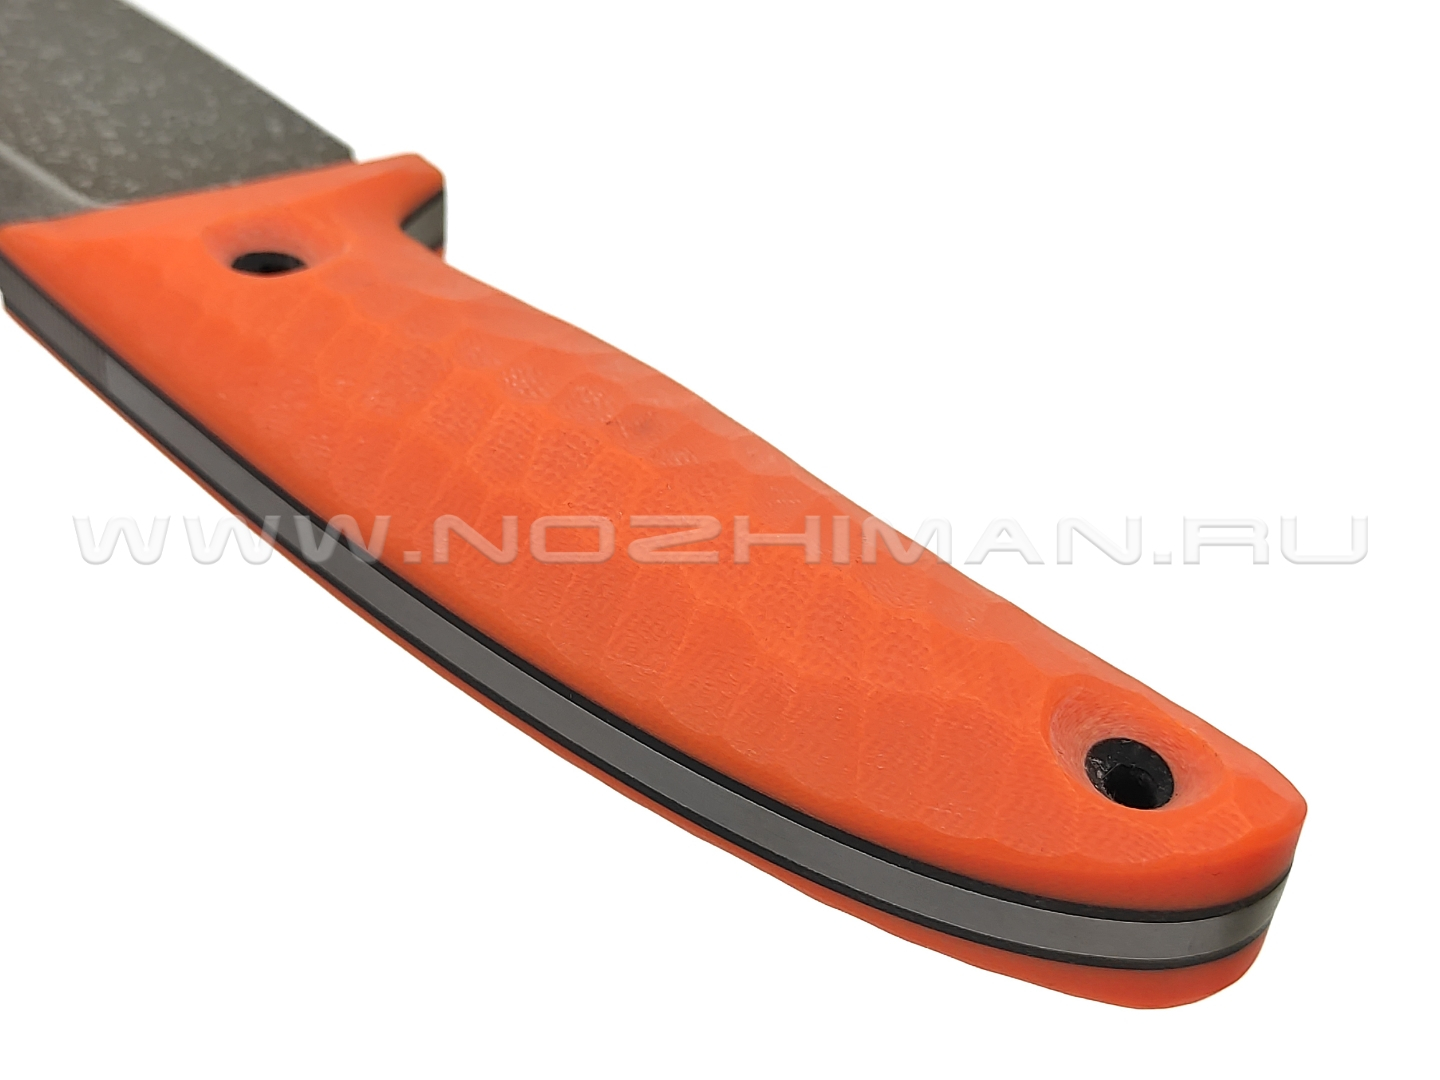 Dyag knives нож Model06_3L сталь N690, рукоять G10 orange